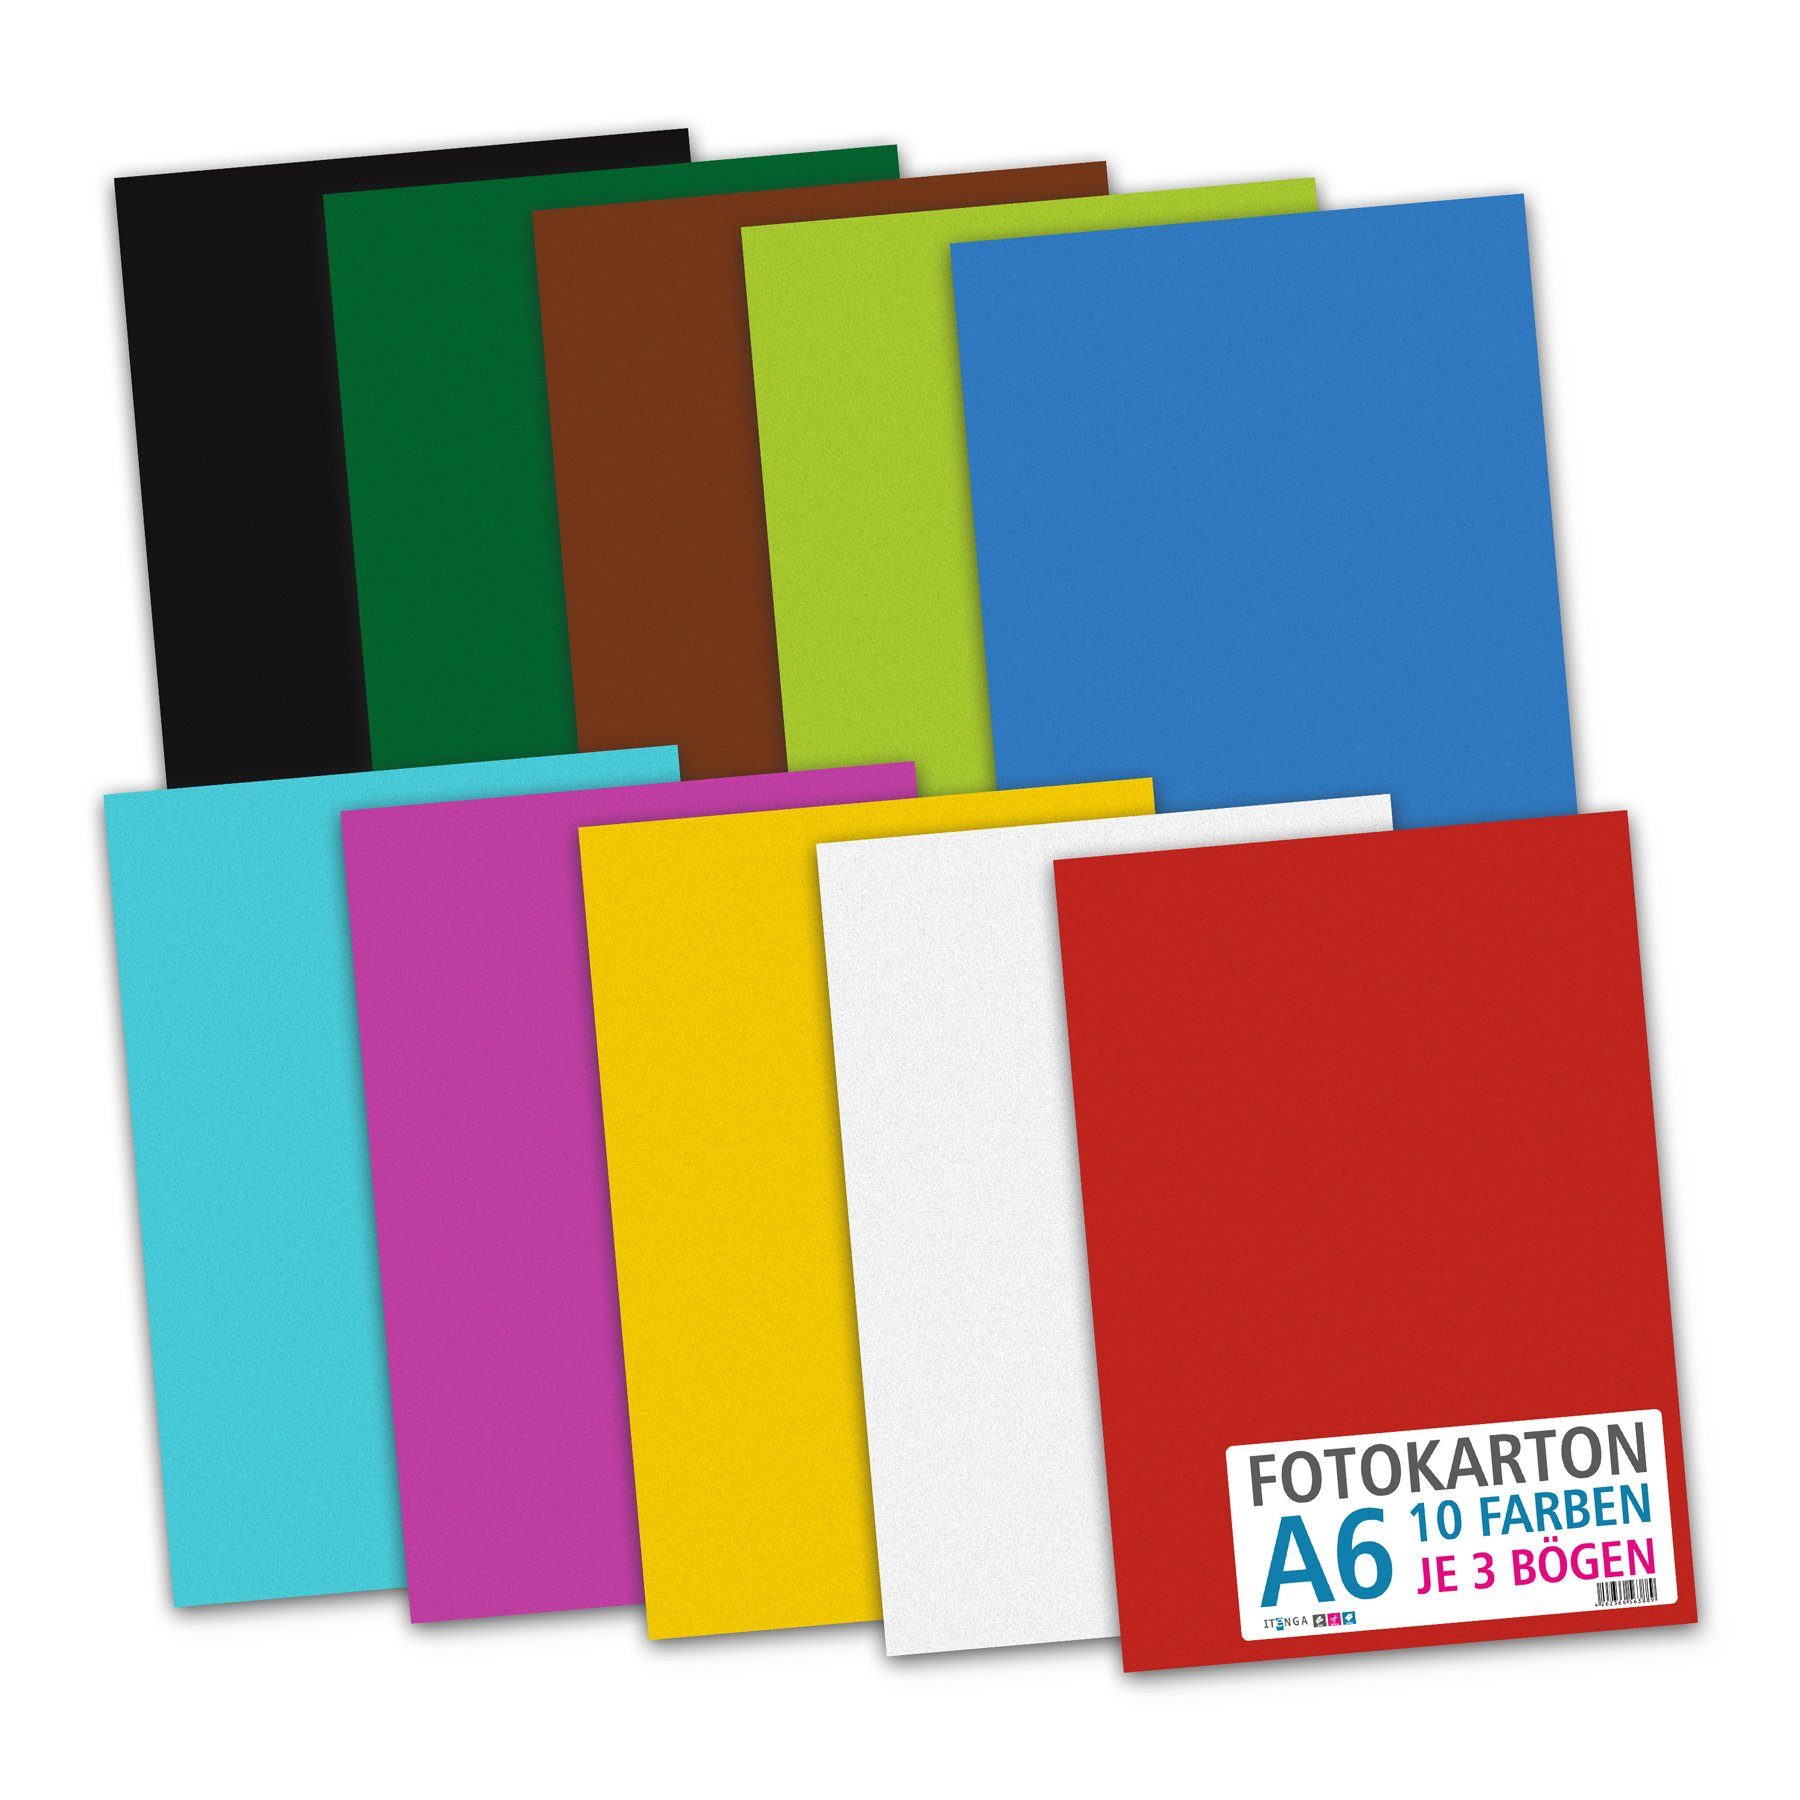 itenga Bastelkartonpapier itenga Fotokarton - DIN A6 - 300 g/qm 30 Blatt - 10 Standardfarben - p